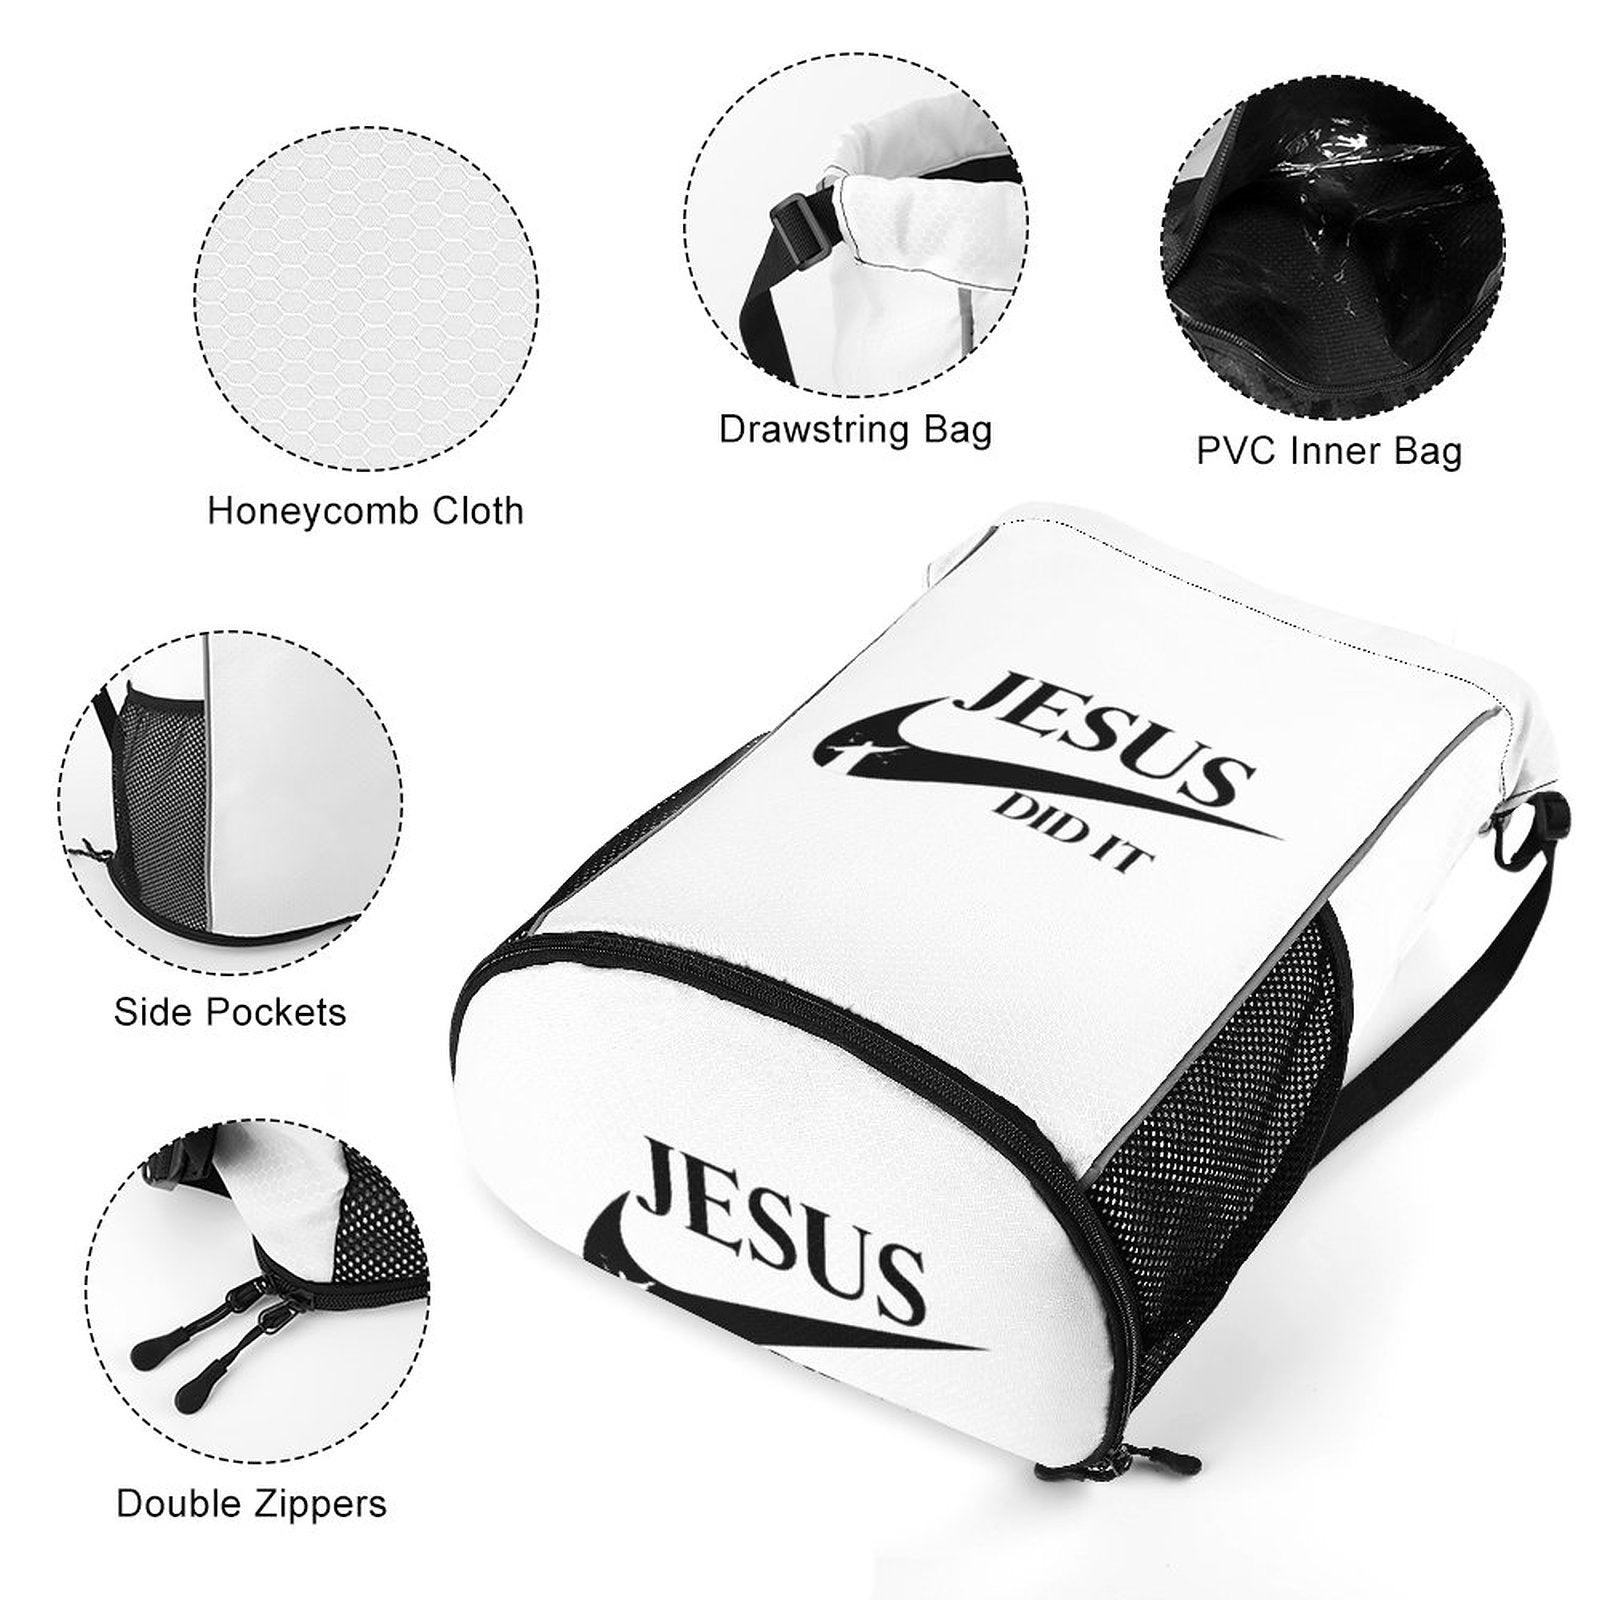 Jesus Did It (like Nike) Christian Waffle Cloth Drawstring Bag SALE-Personal Design